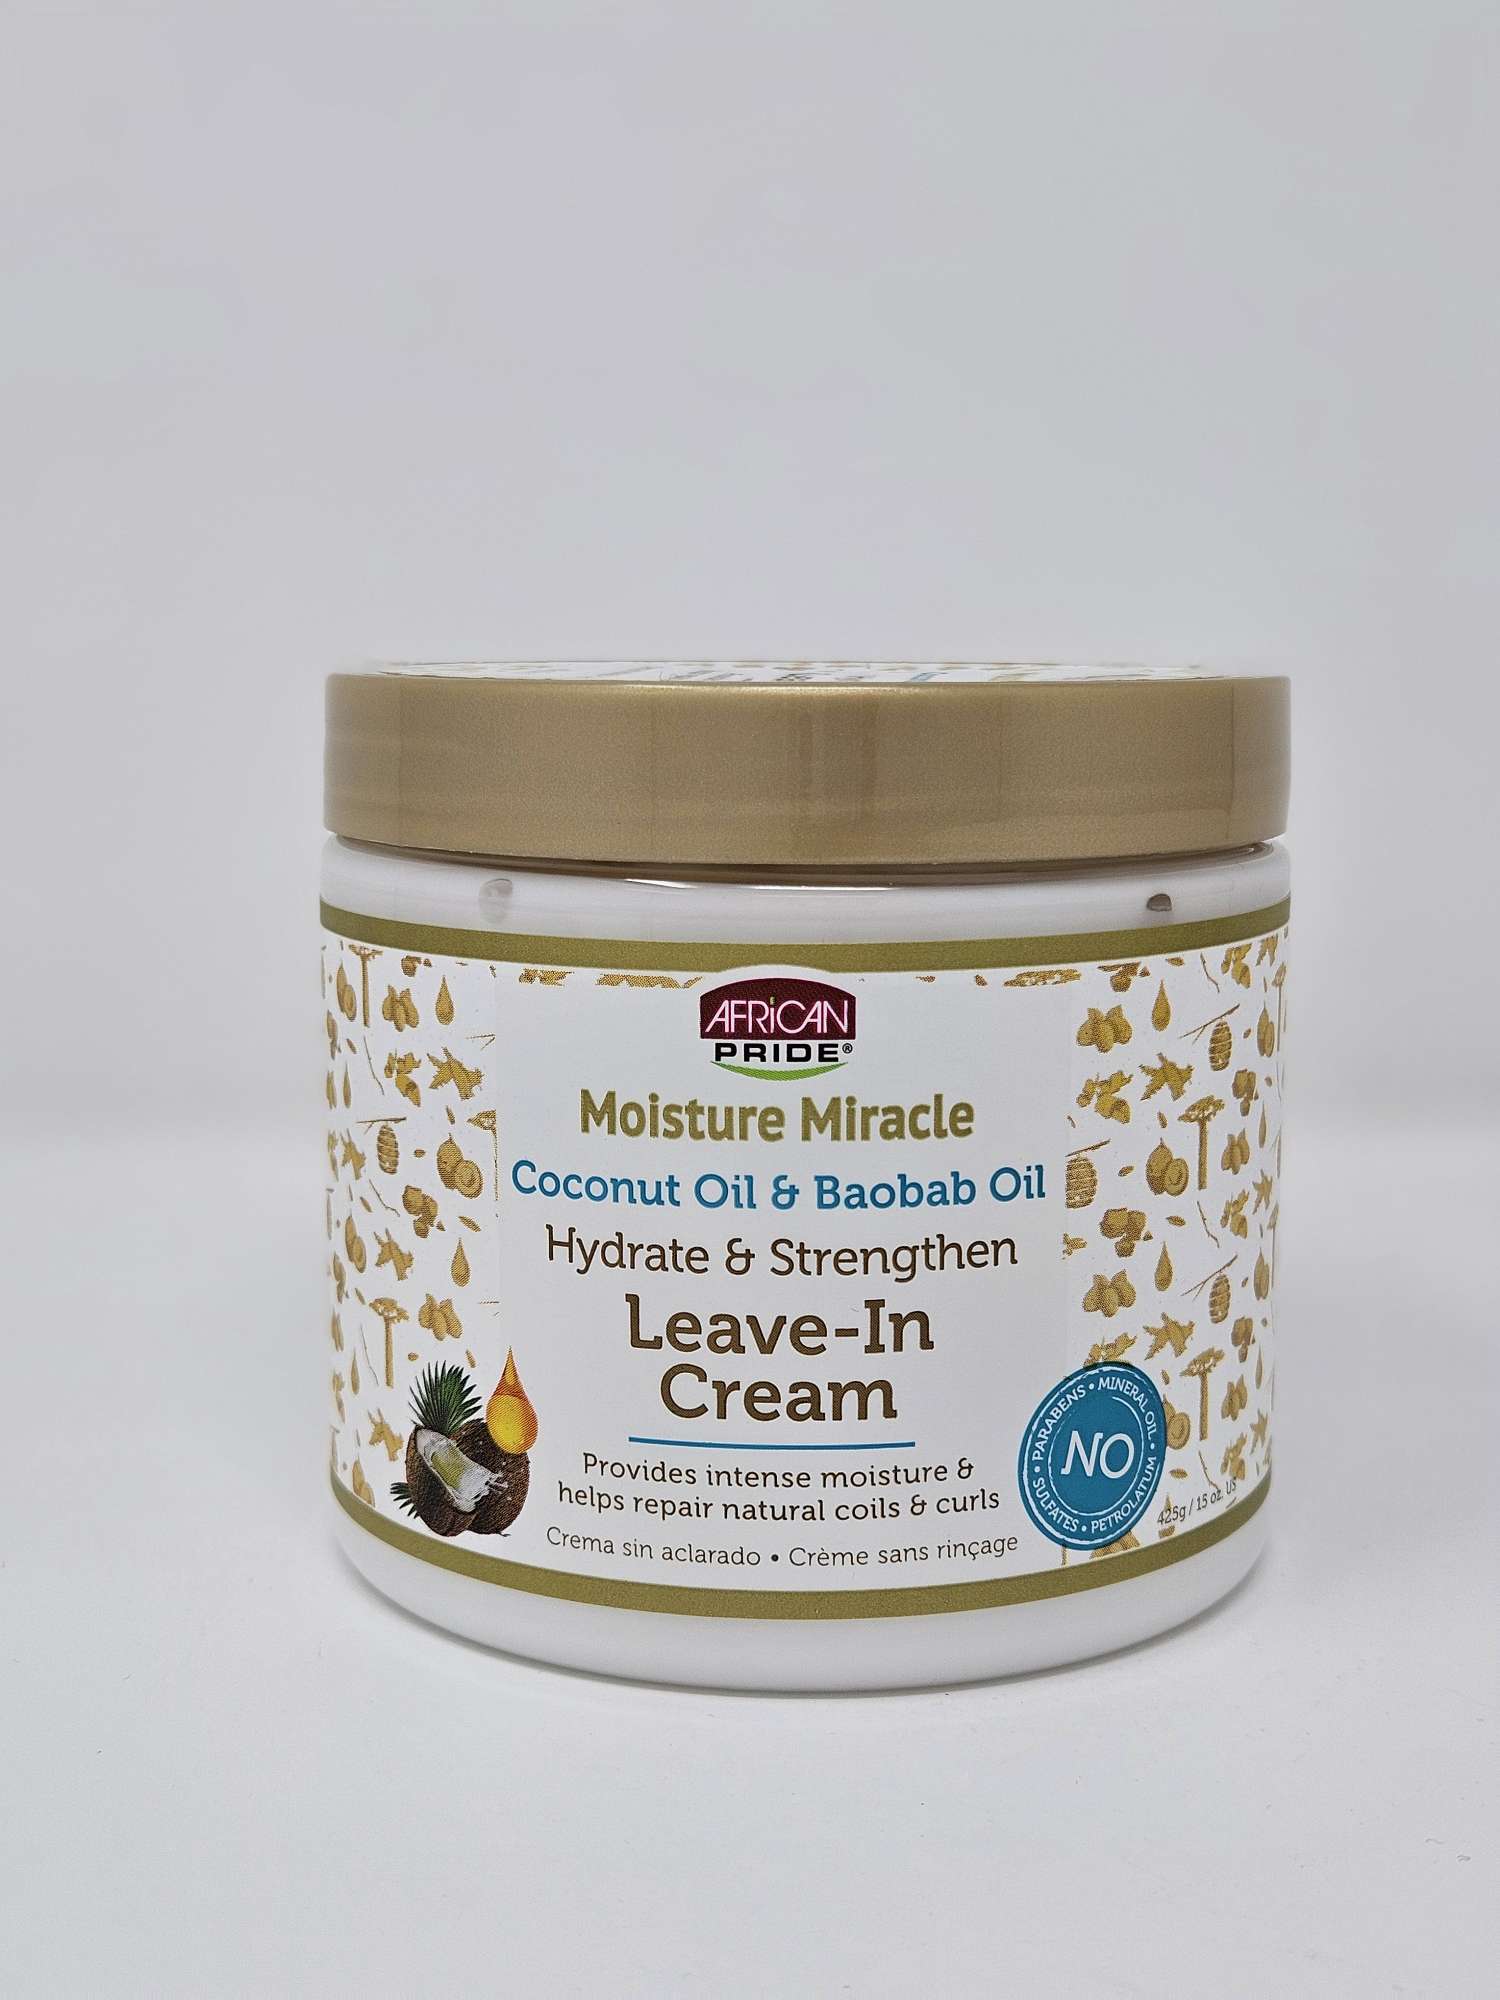 African Pride Moisture Miracle Coconut Oil & Baobab Oil Leave-In Cream - 15oz